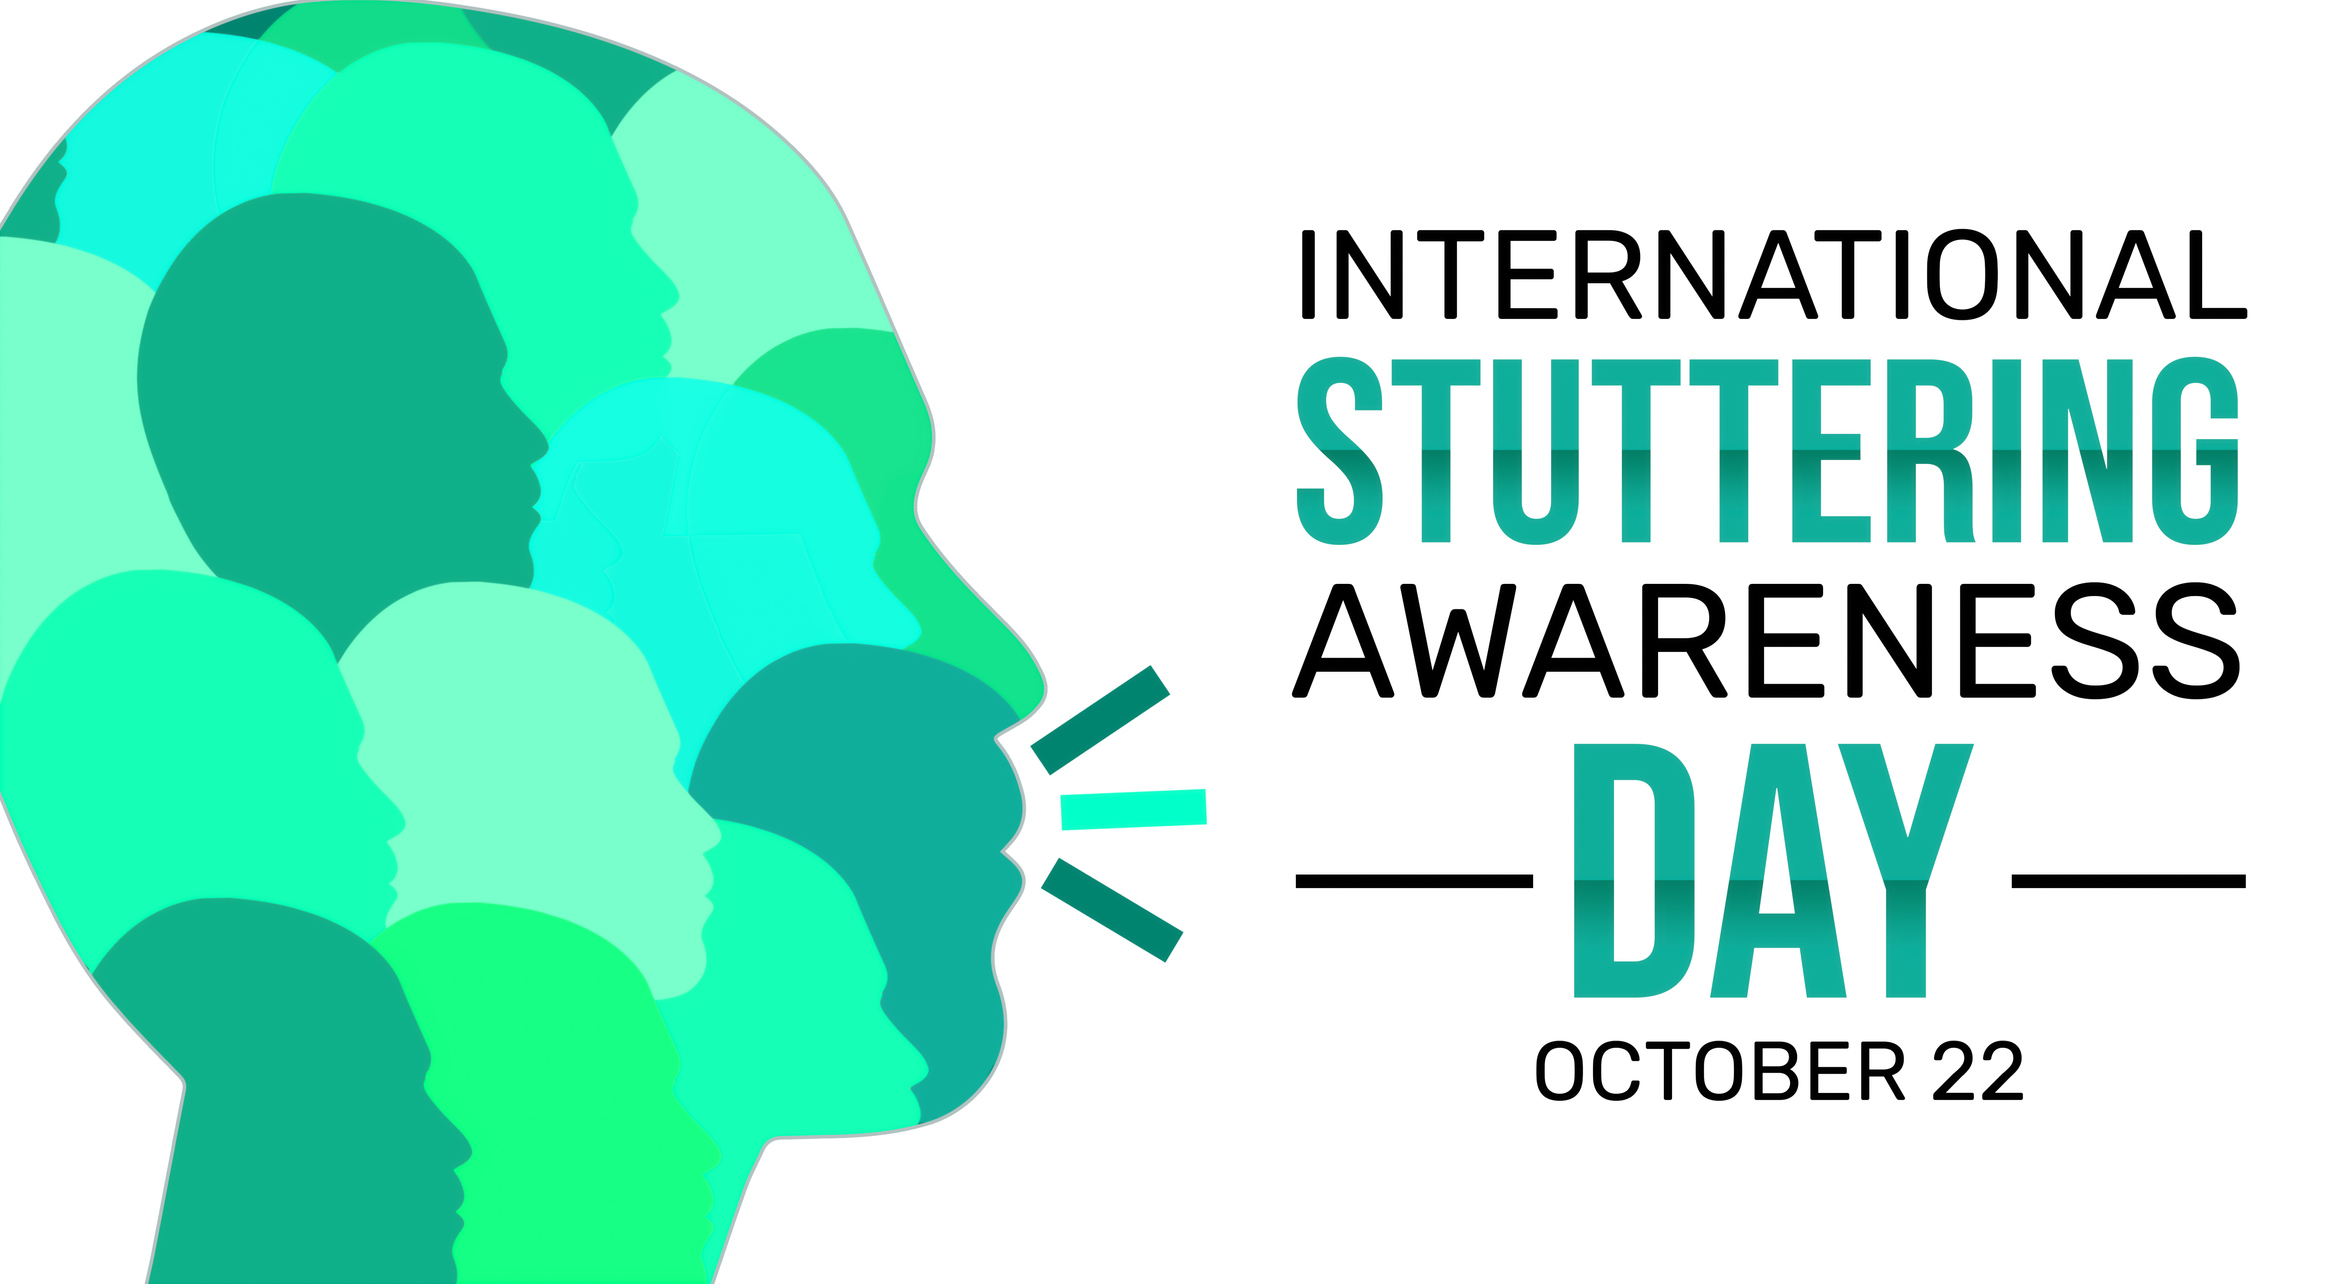 National Stuttering Awareness Day